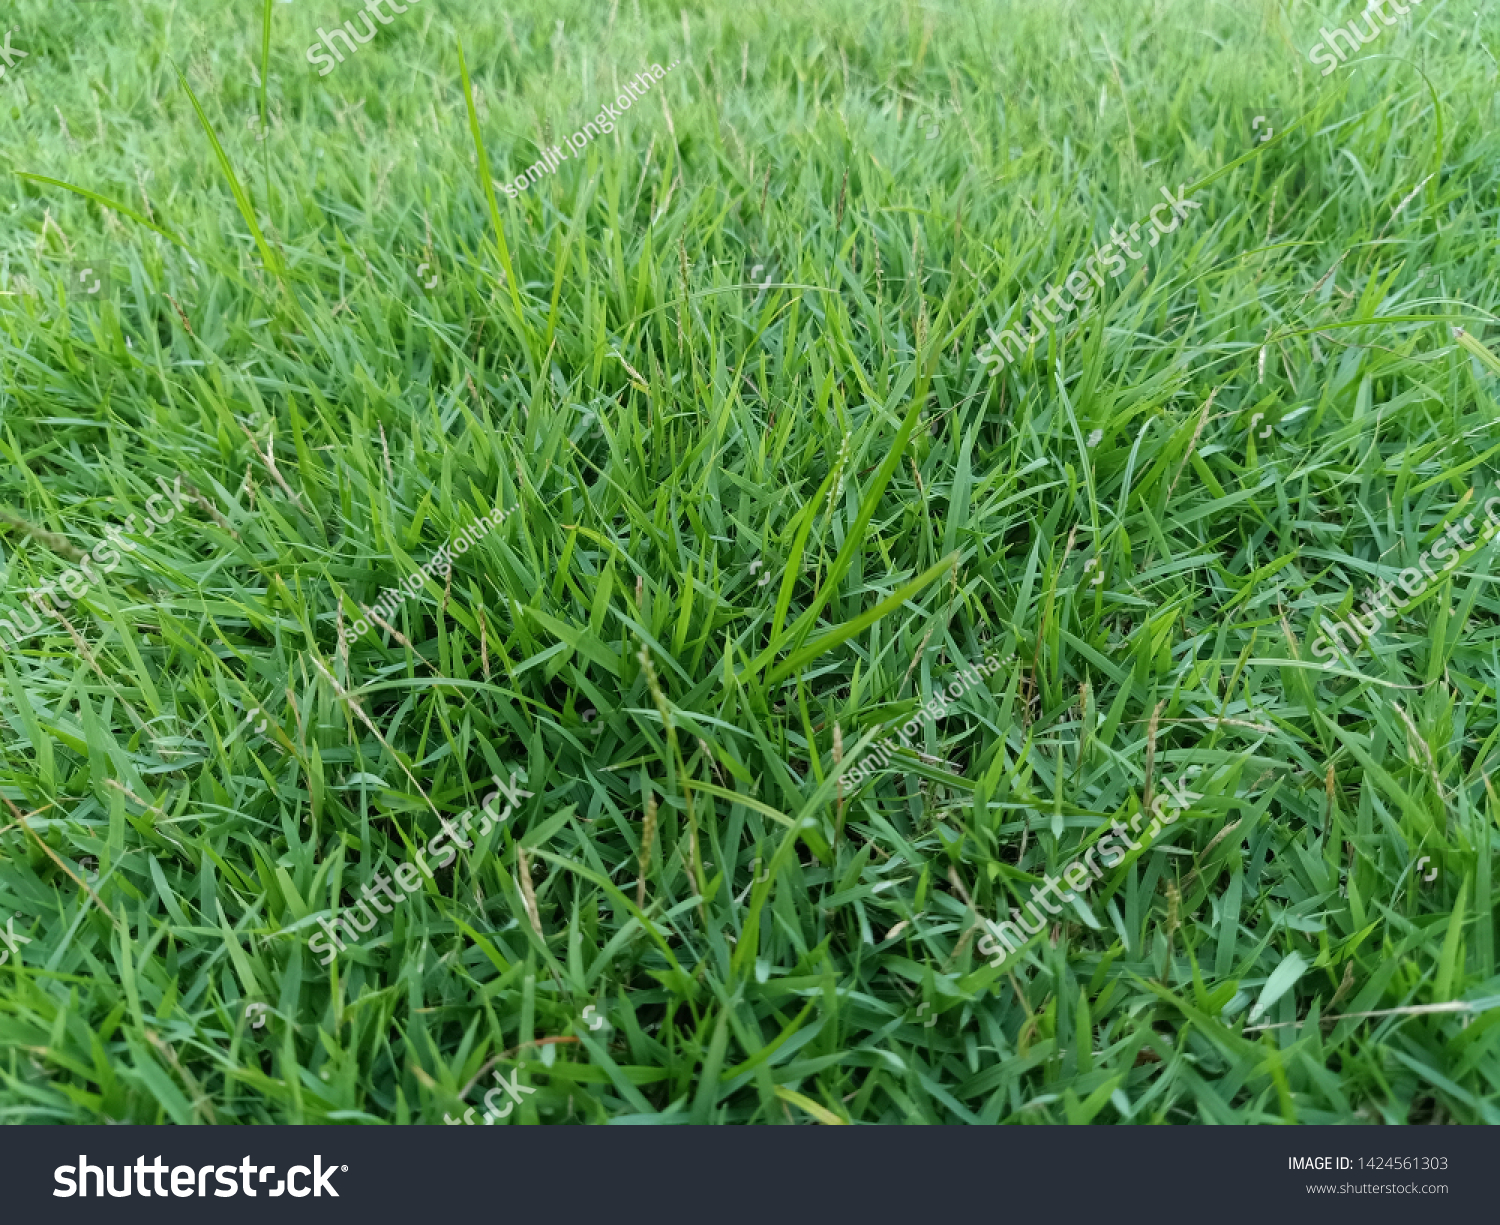 Fresh green grass, comfortable to the eye #1424561303